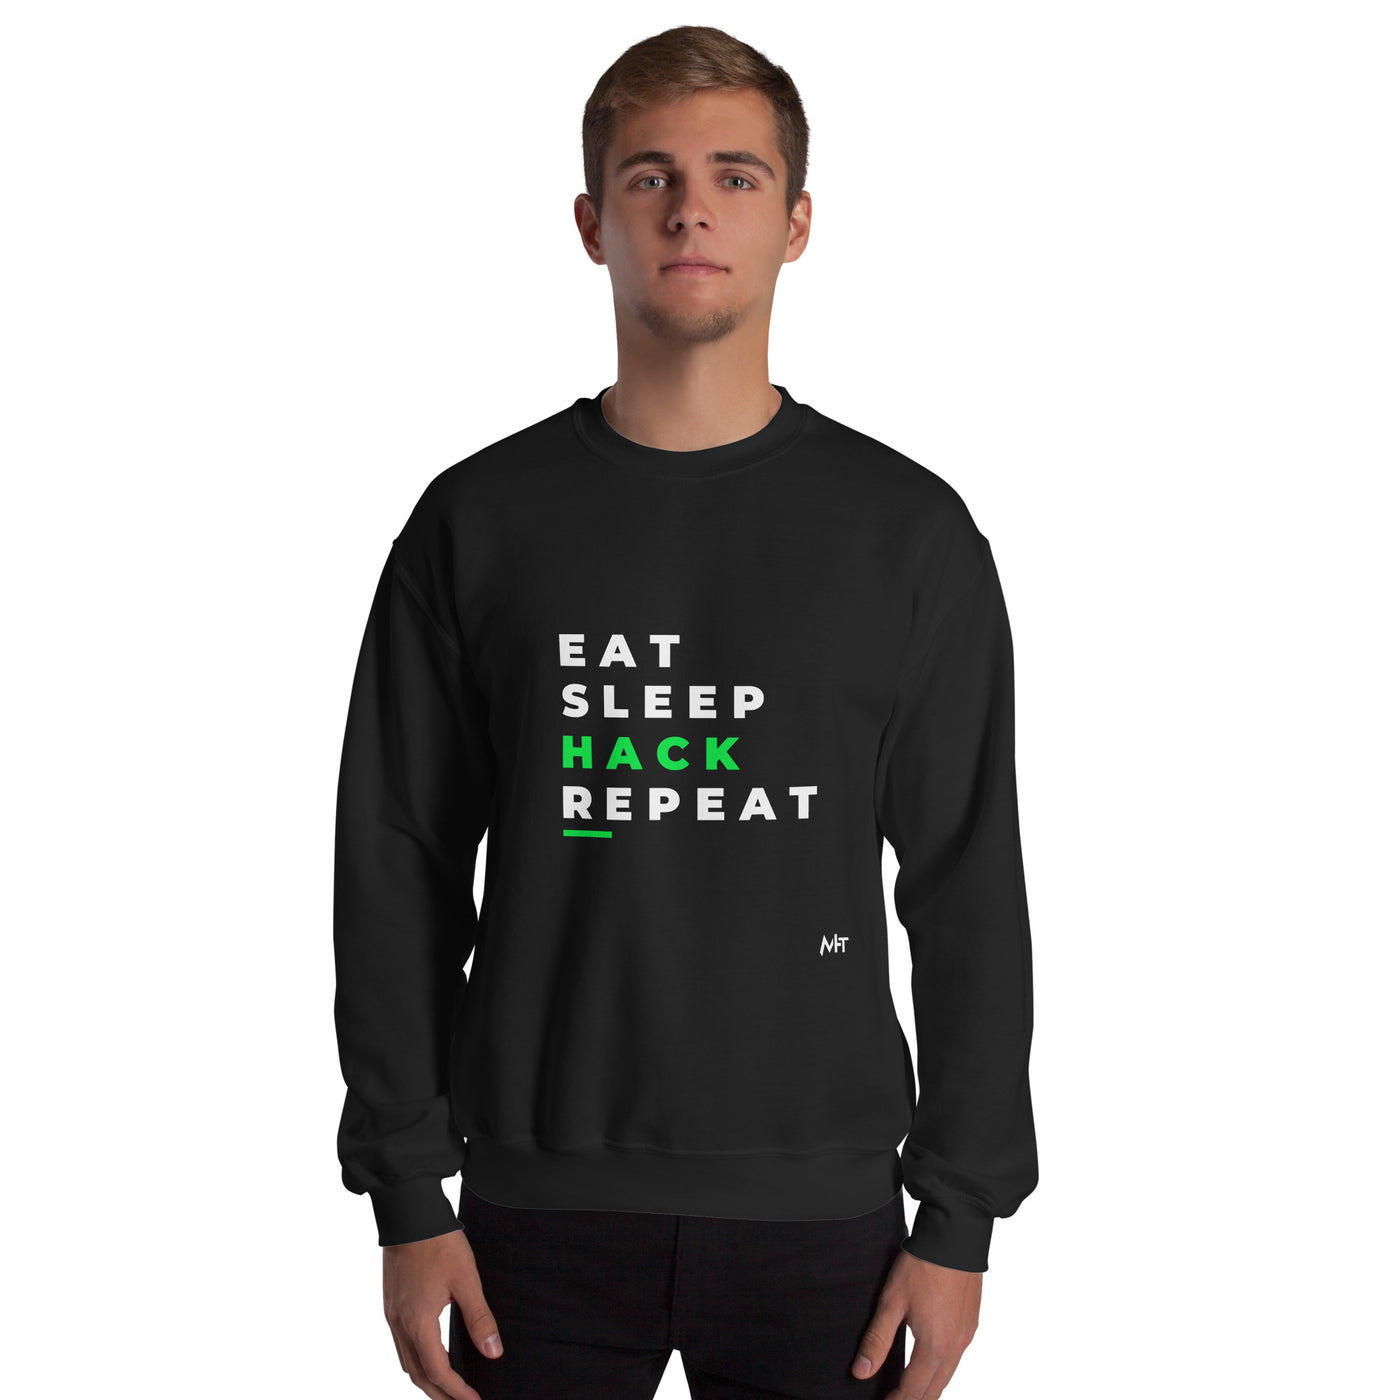 Eat, Sleep, Hack, Repeat V2 - Unisex Sweatshirt